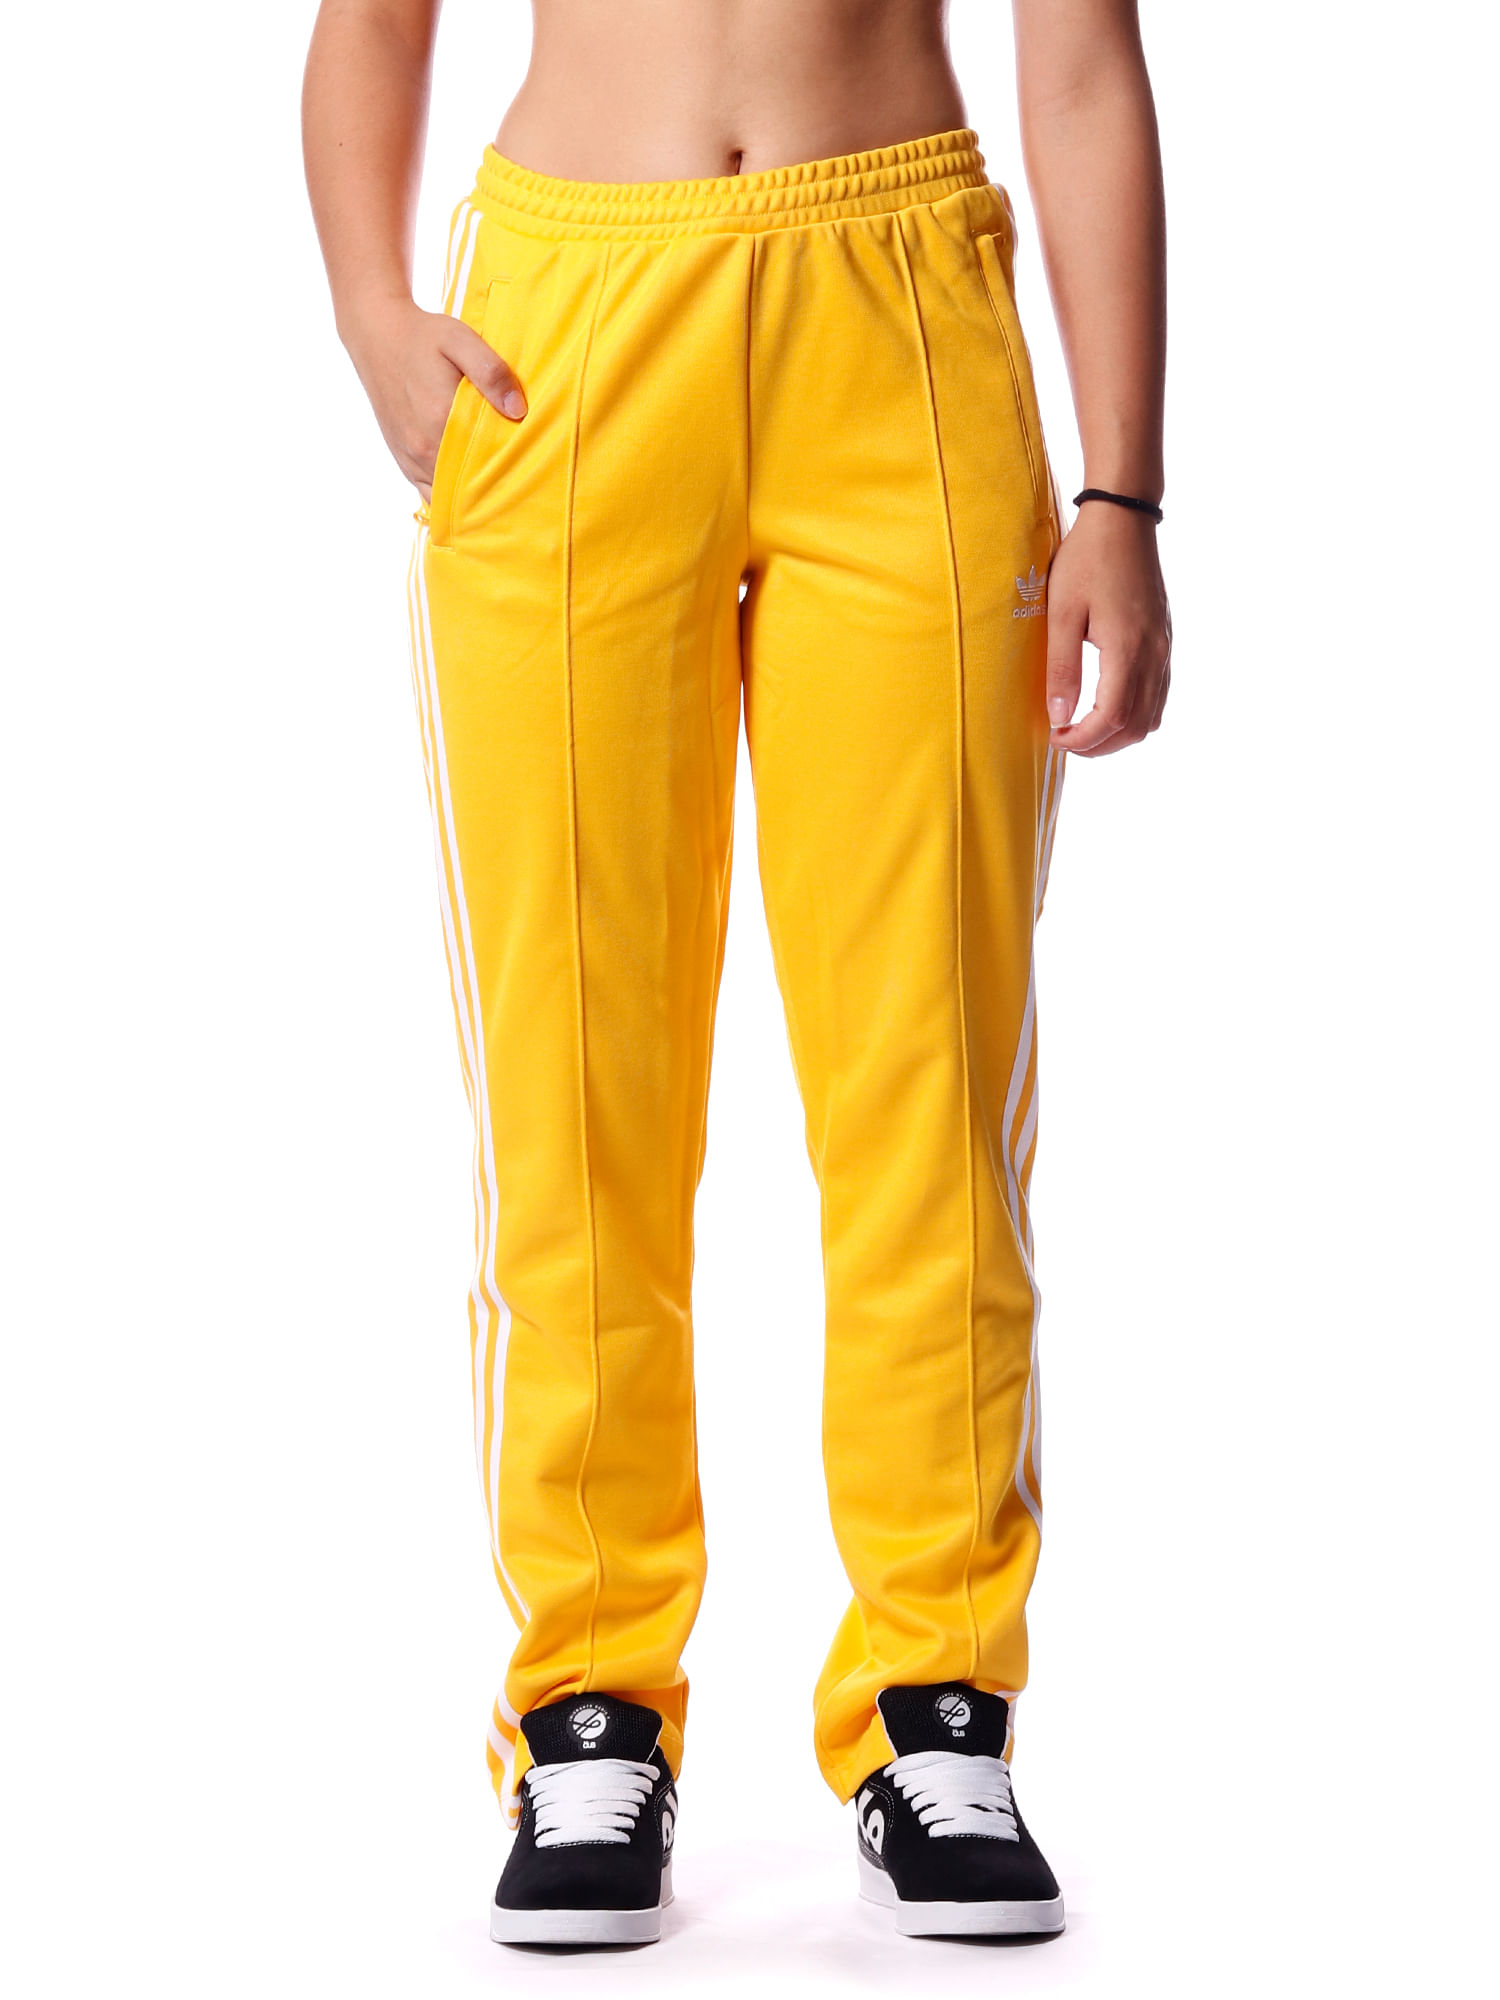 Calca-adidas-montreal-Amarelo